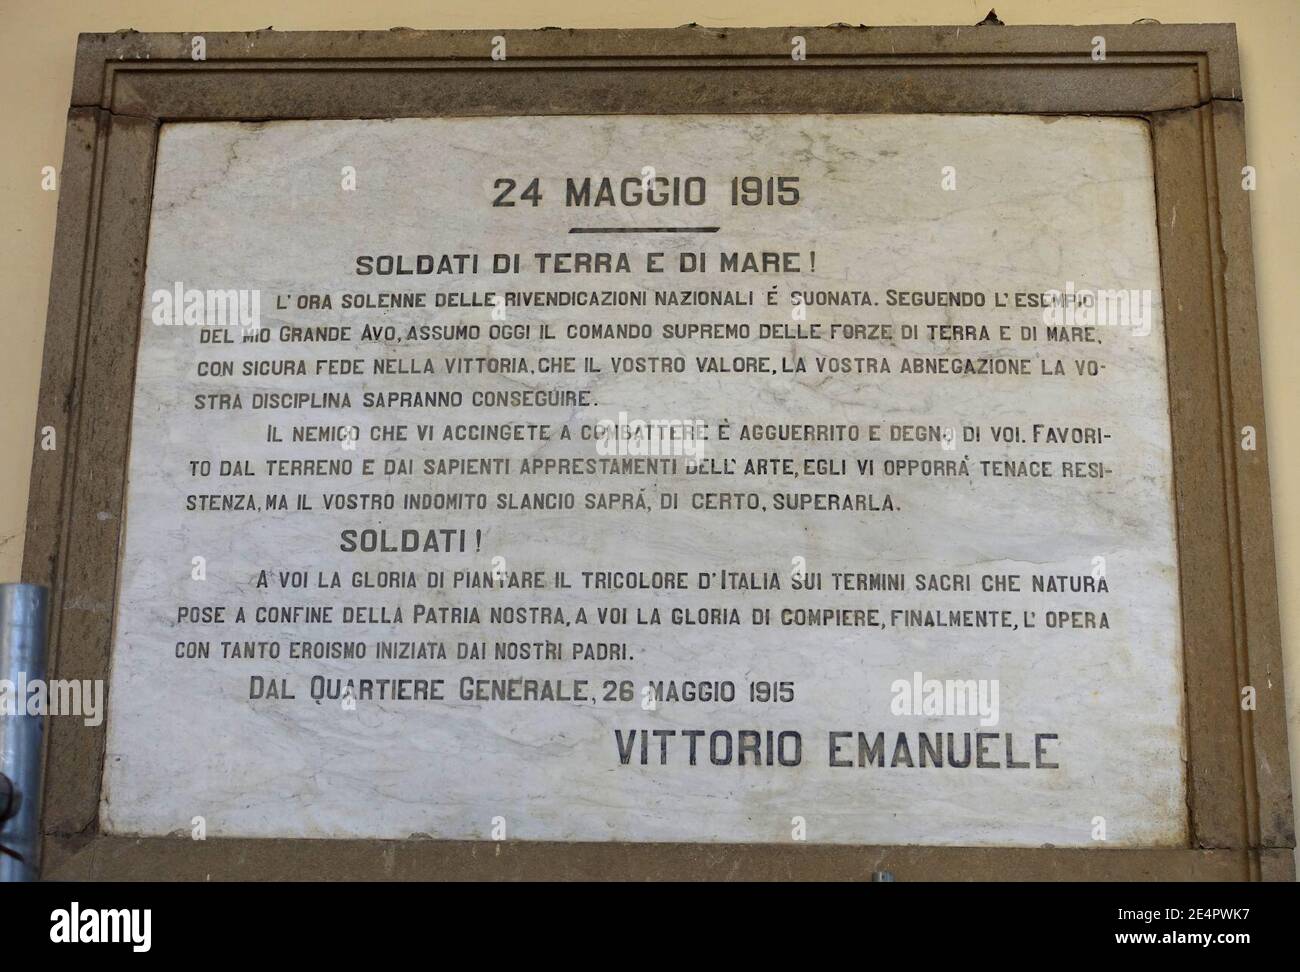 May 24, 1915 memorial - Palazzo dei Priori - Viterbo, Italy Stock Photo -  Alamy